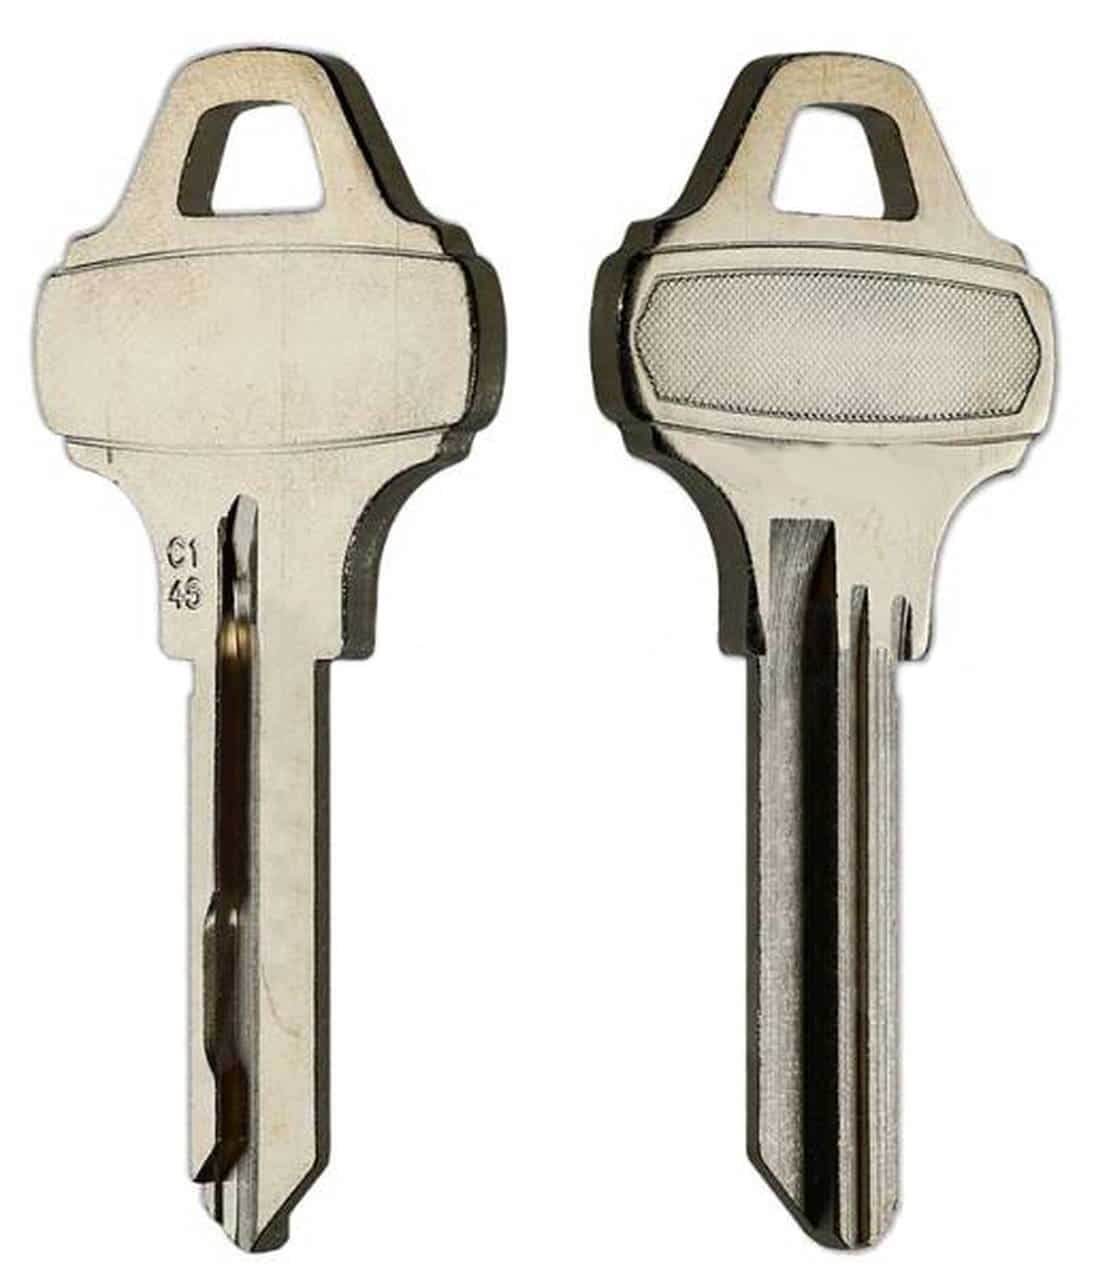 C145 LockGenics Everest key blank